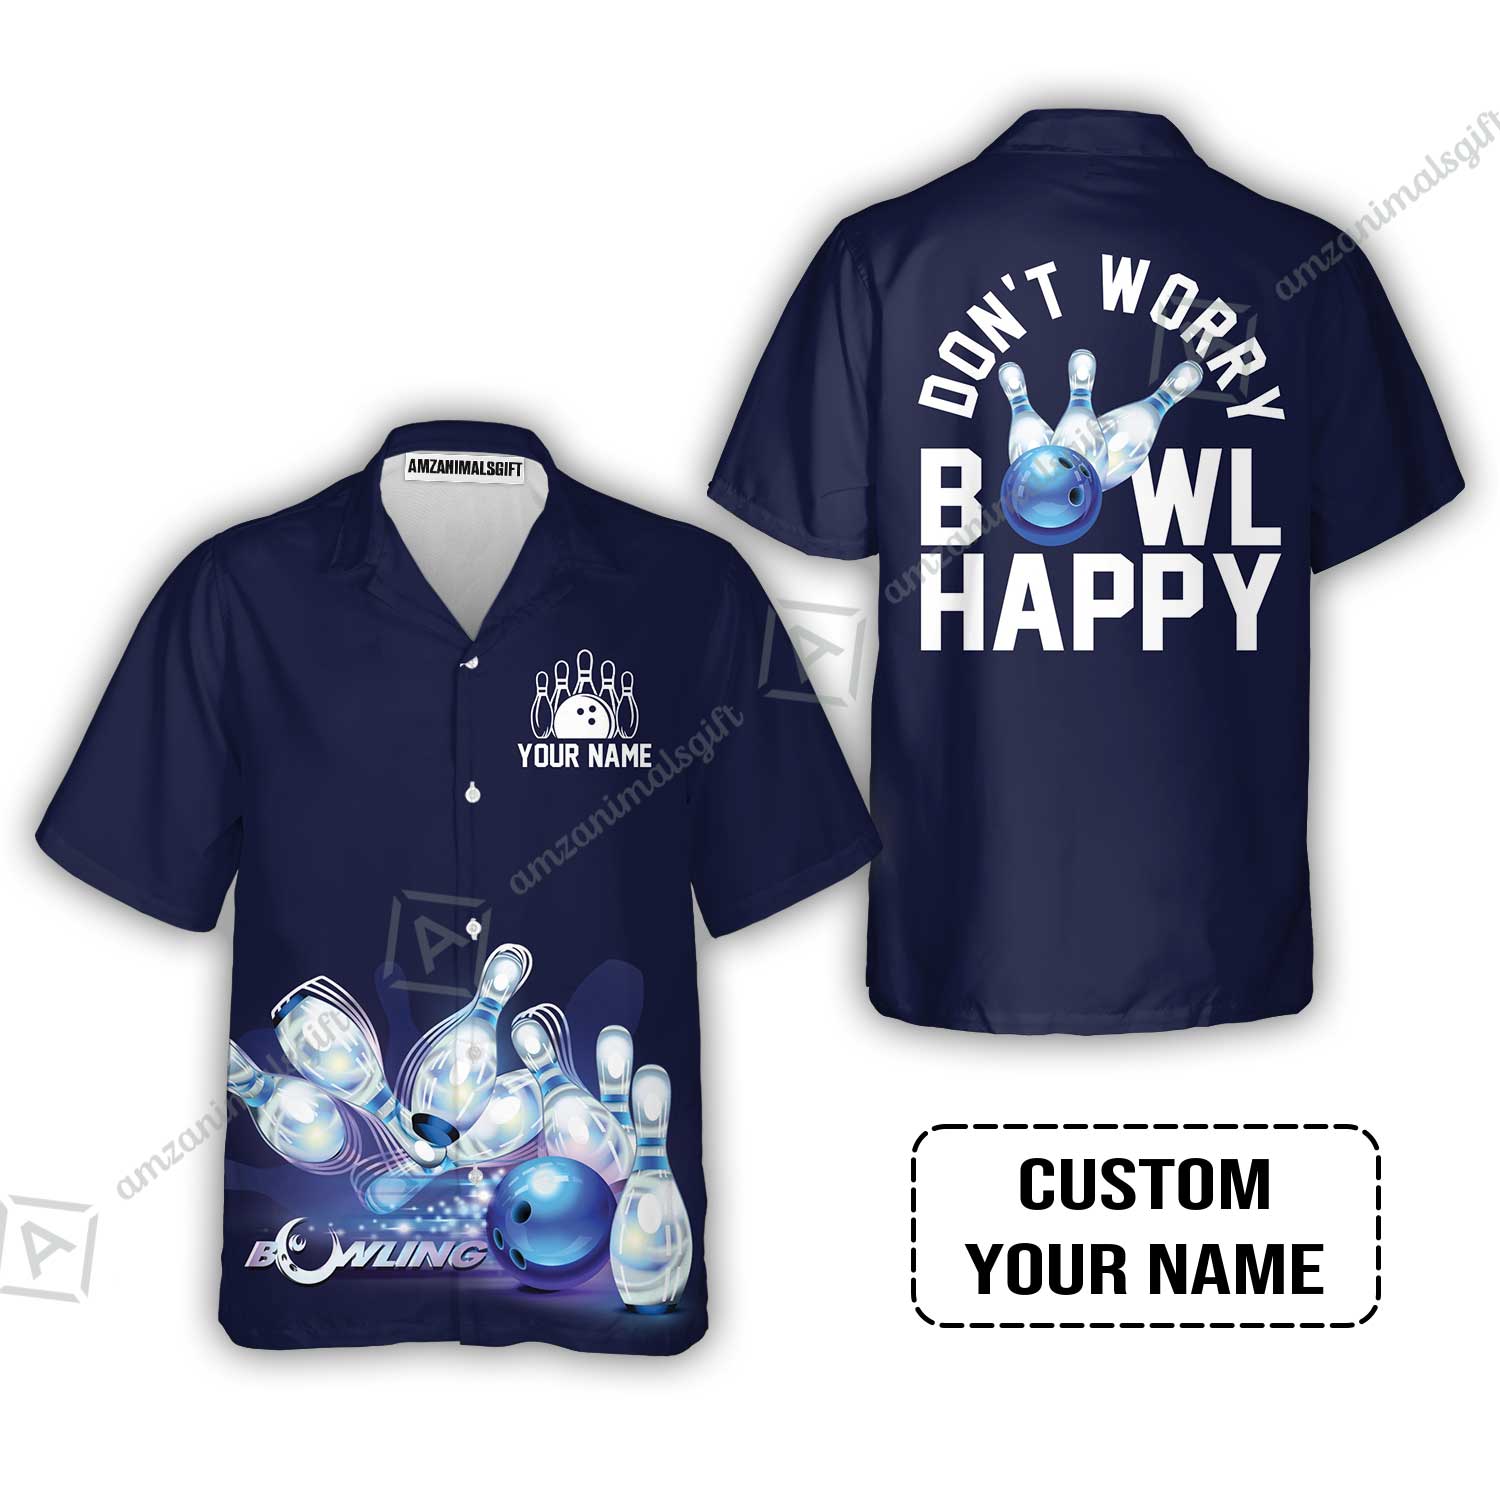 Bowling Custom Name Hawaiian Shirt - Don't Worry Bowl Happy Personalized Hawaiian Shirt - Gift For Friend, Family, Bowling Lovers